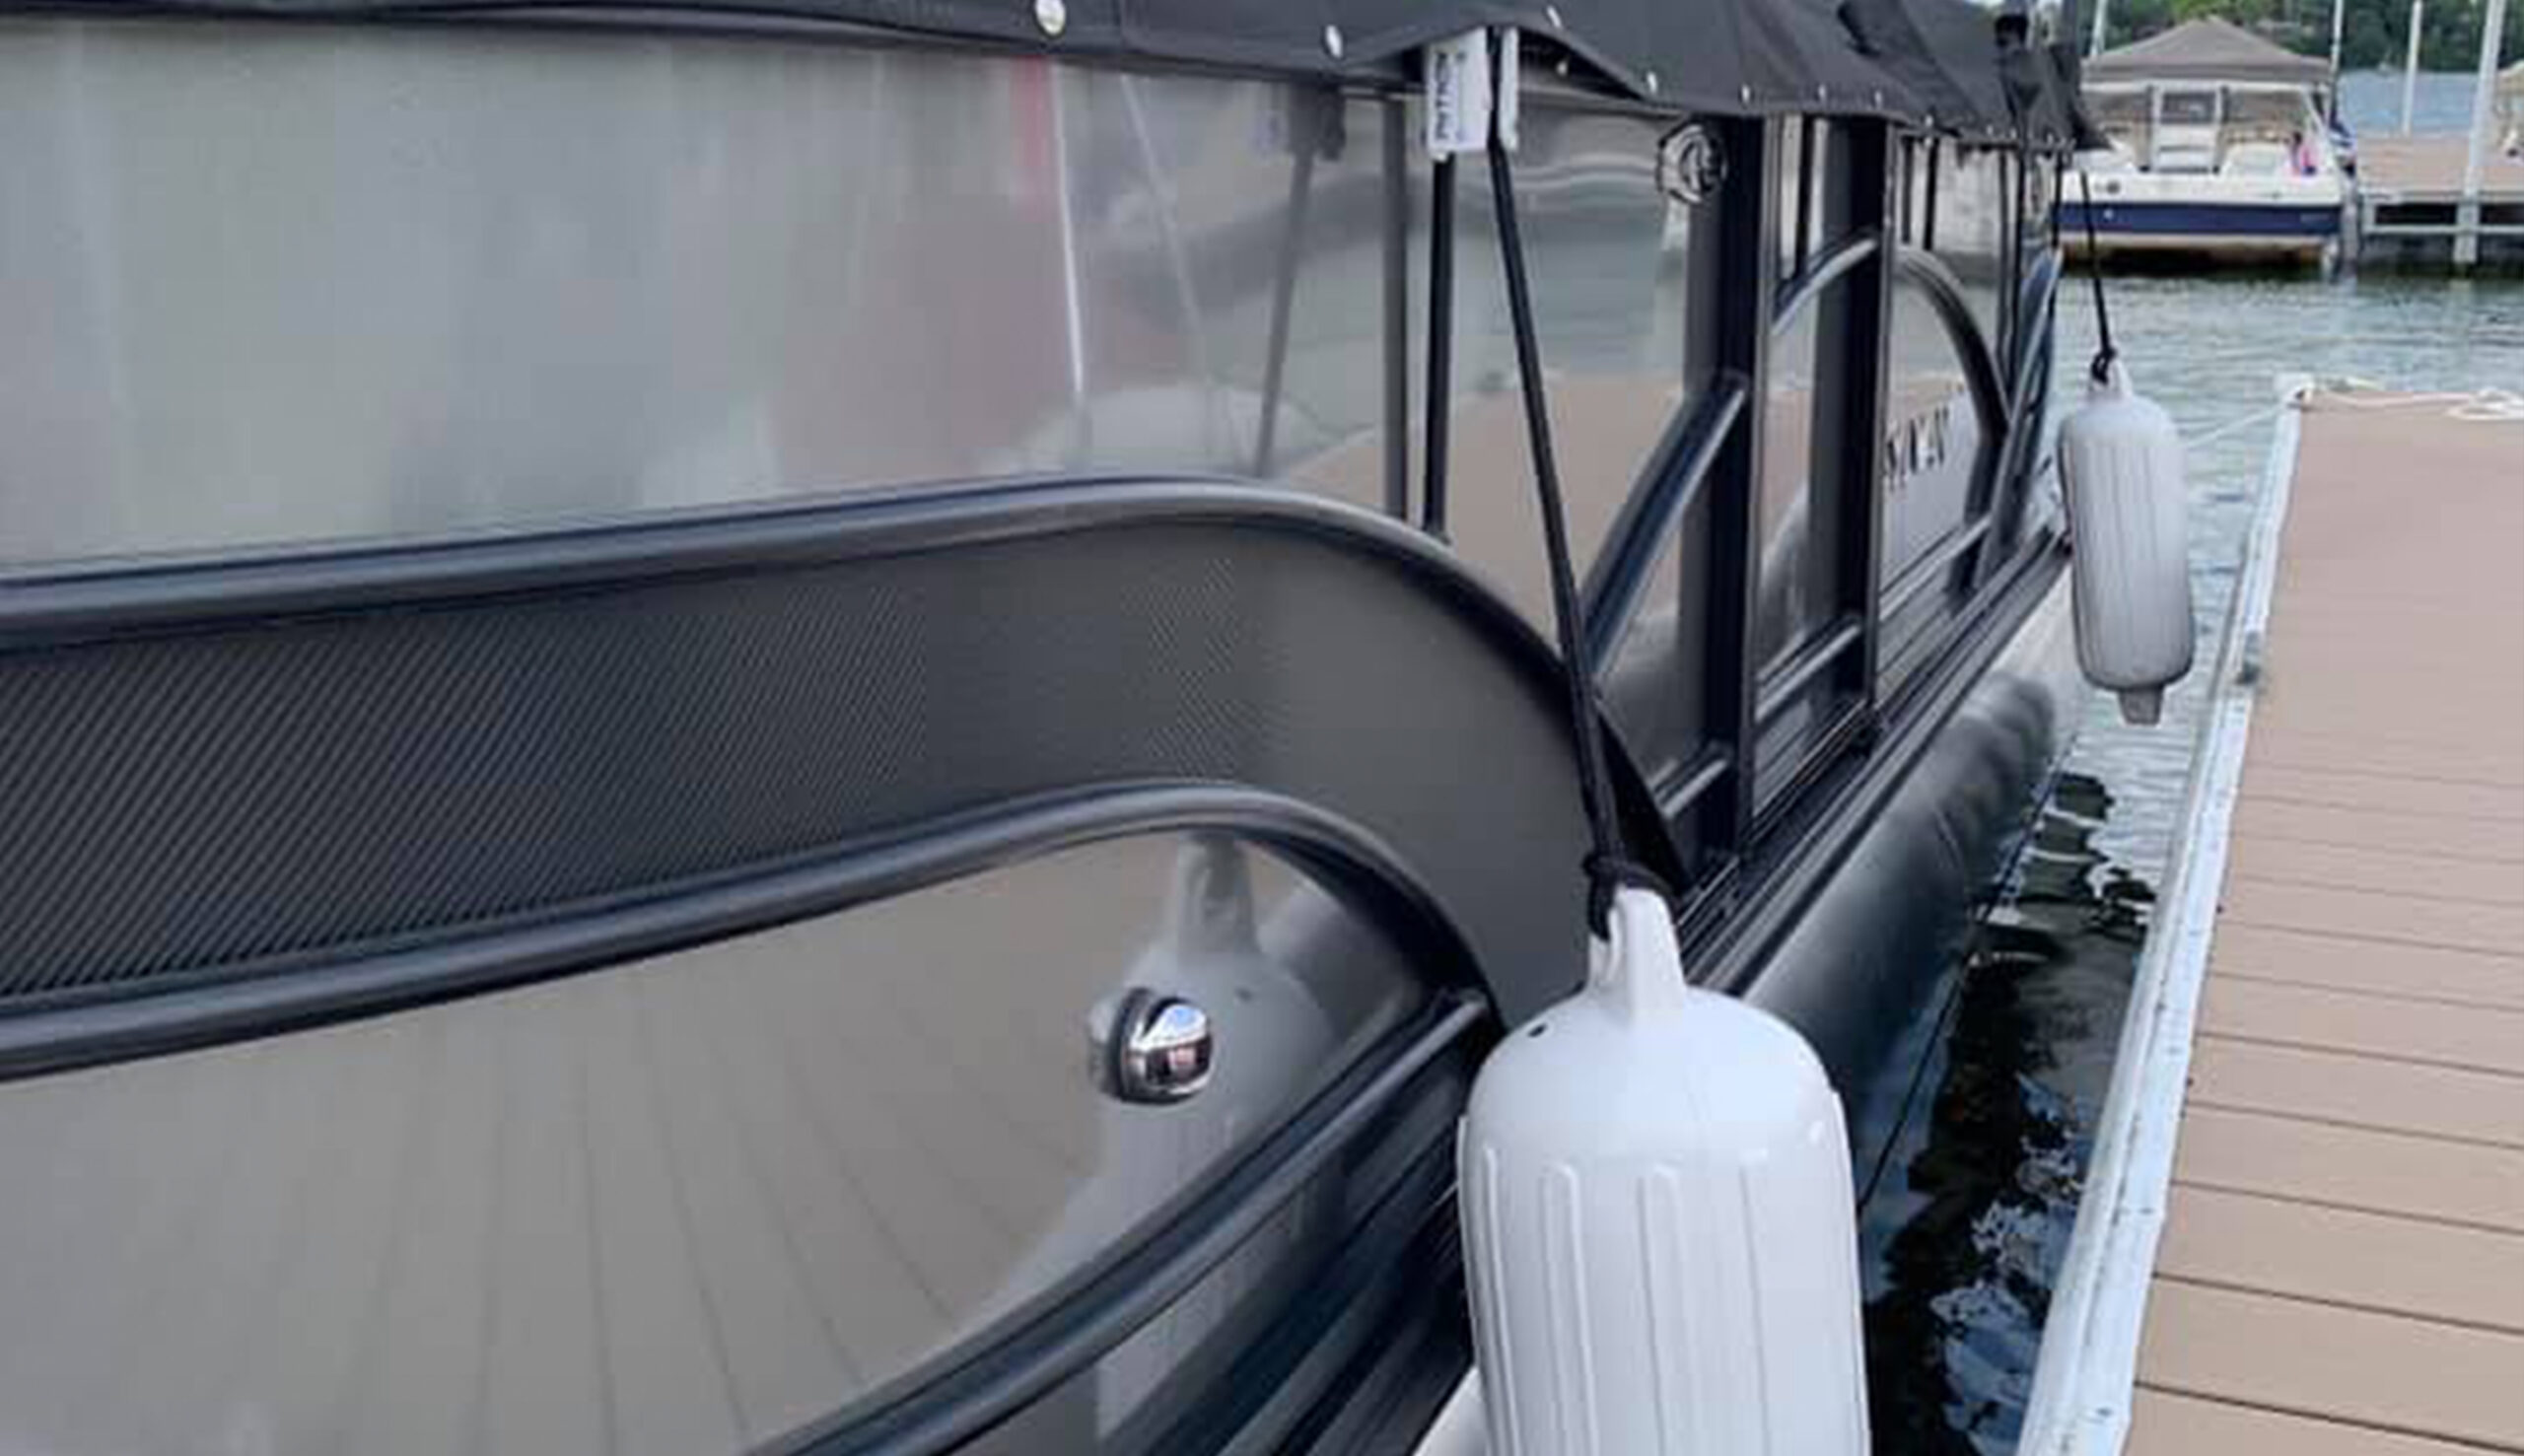 Square Rail Fender Hanger Pontoon Boat Accessories Pontoon Boat Fenders  Clips